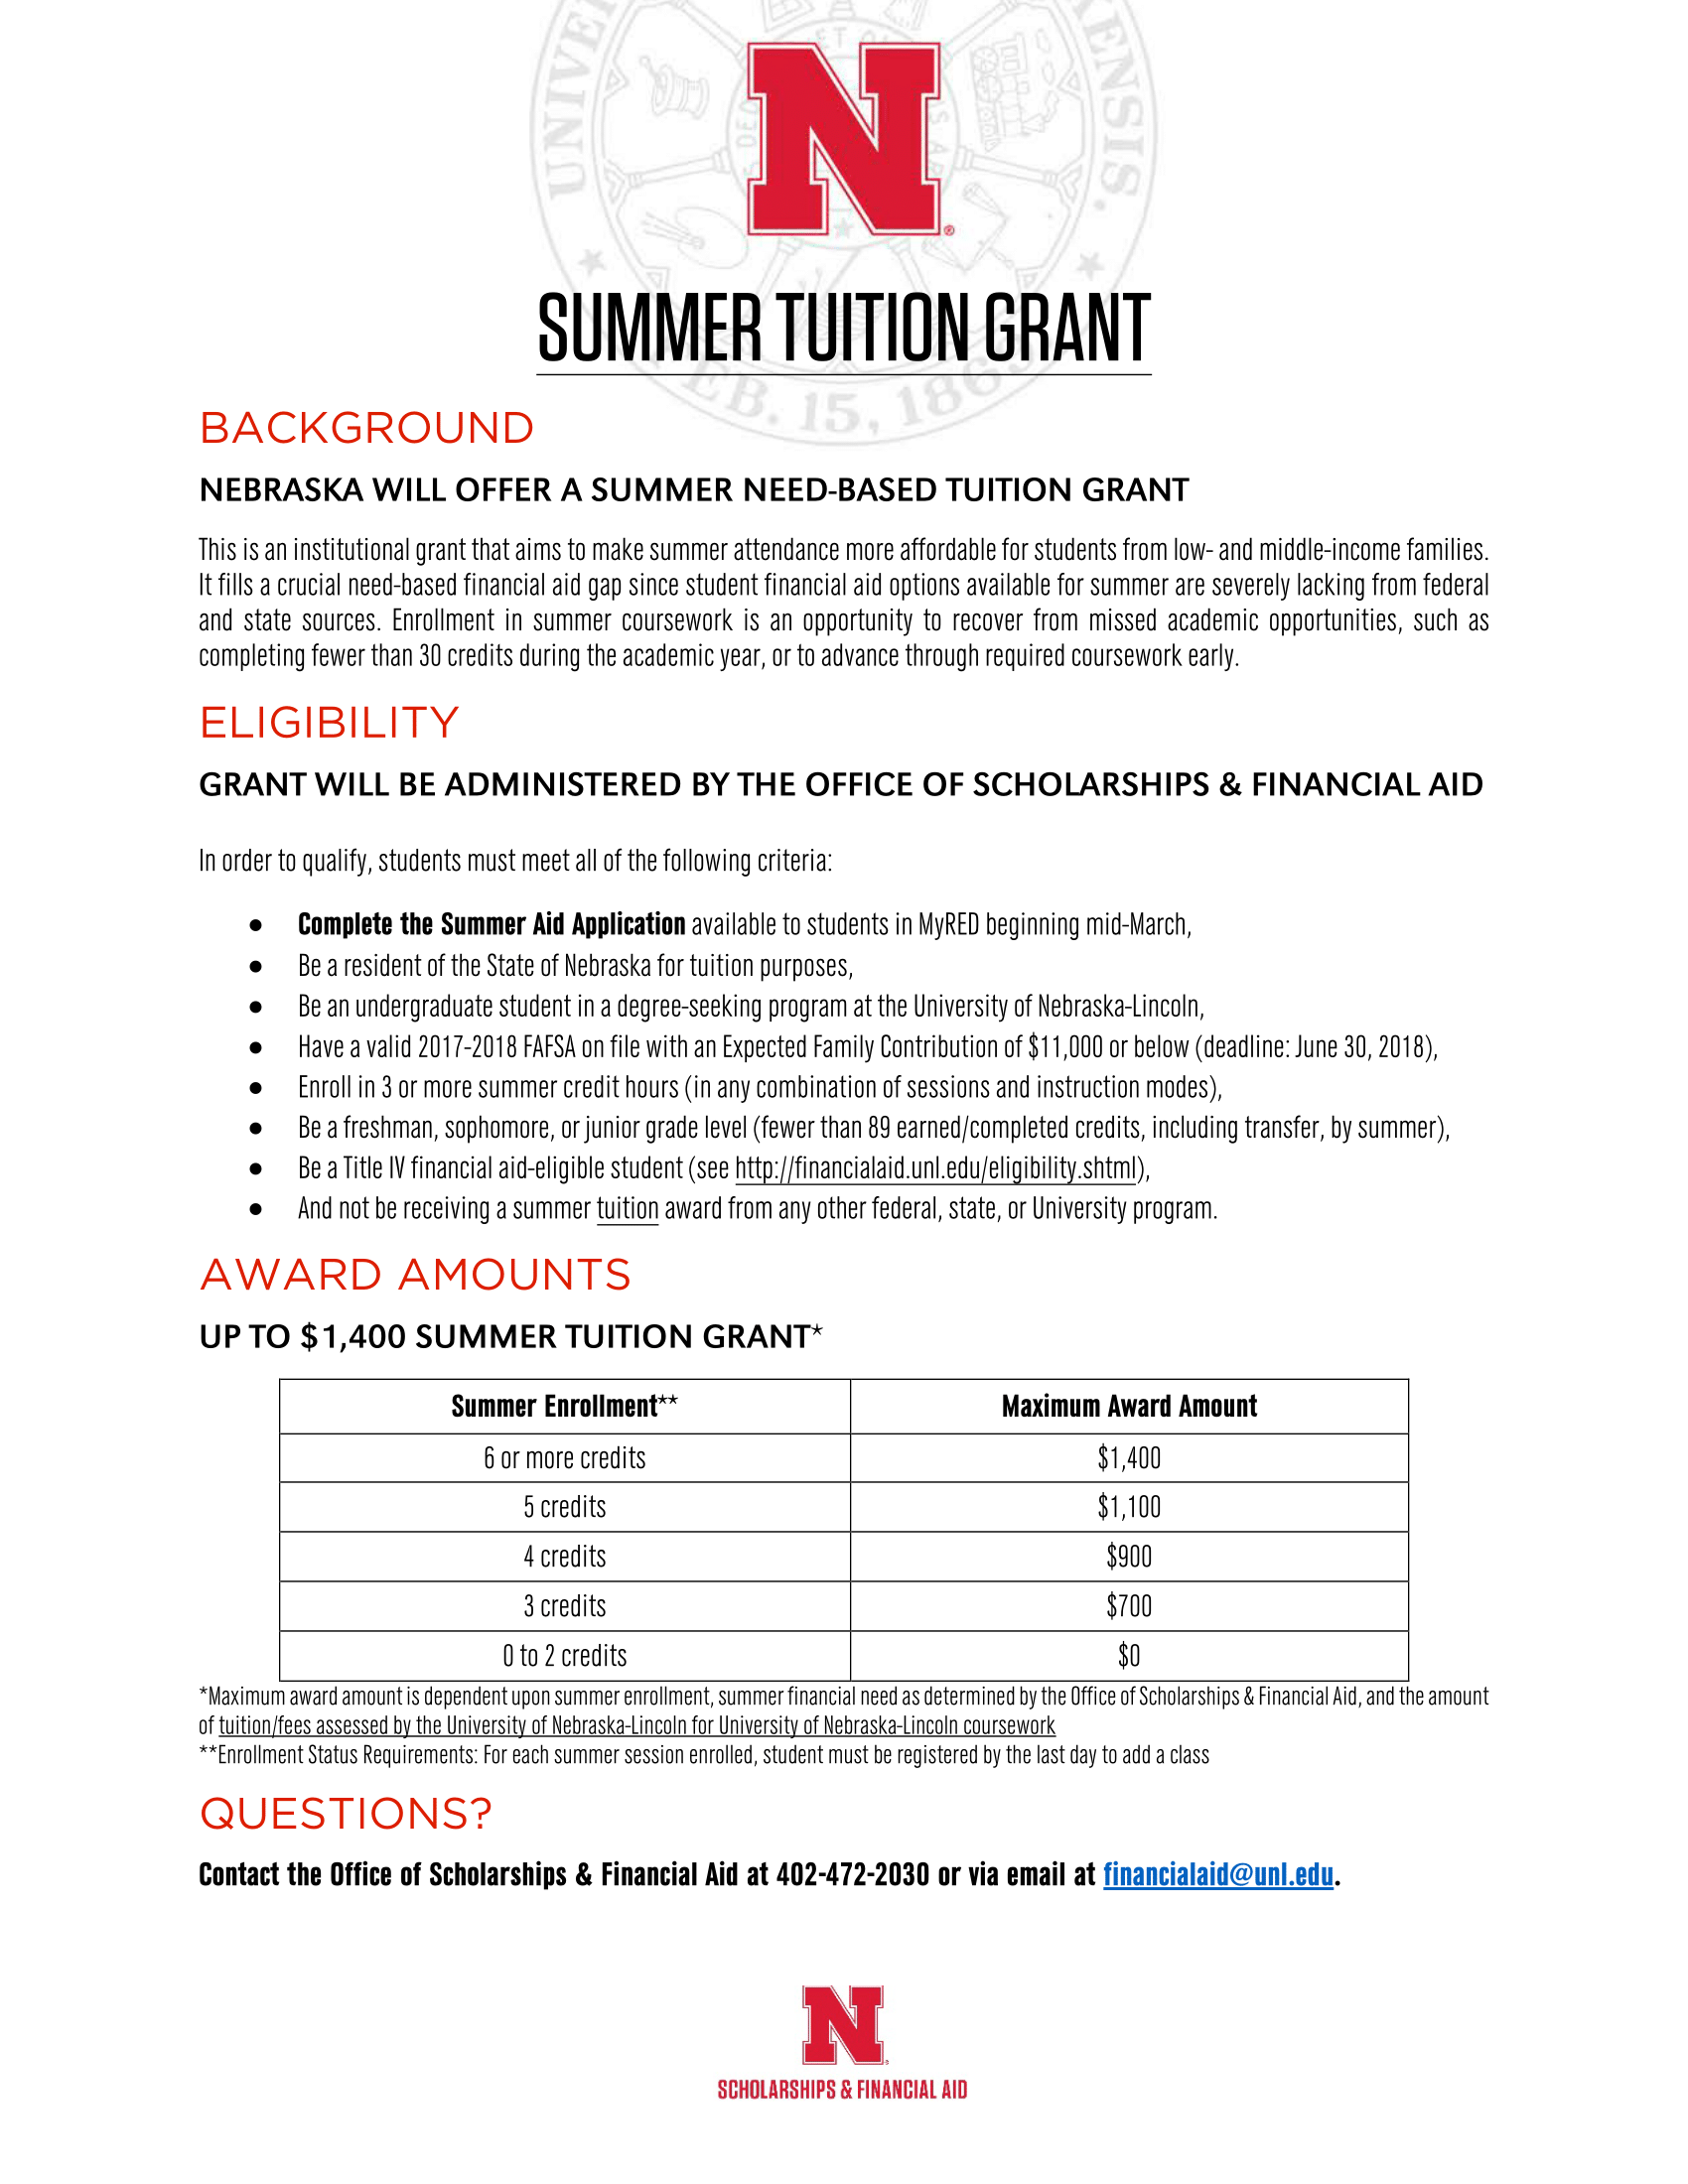 Nebraska Summer Need-Based Tuition Grant